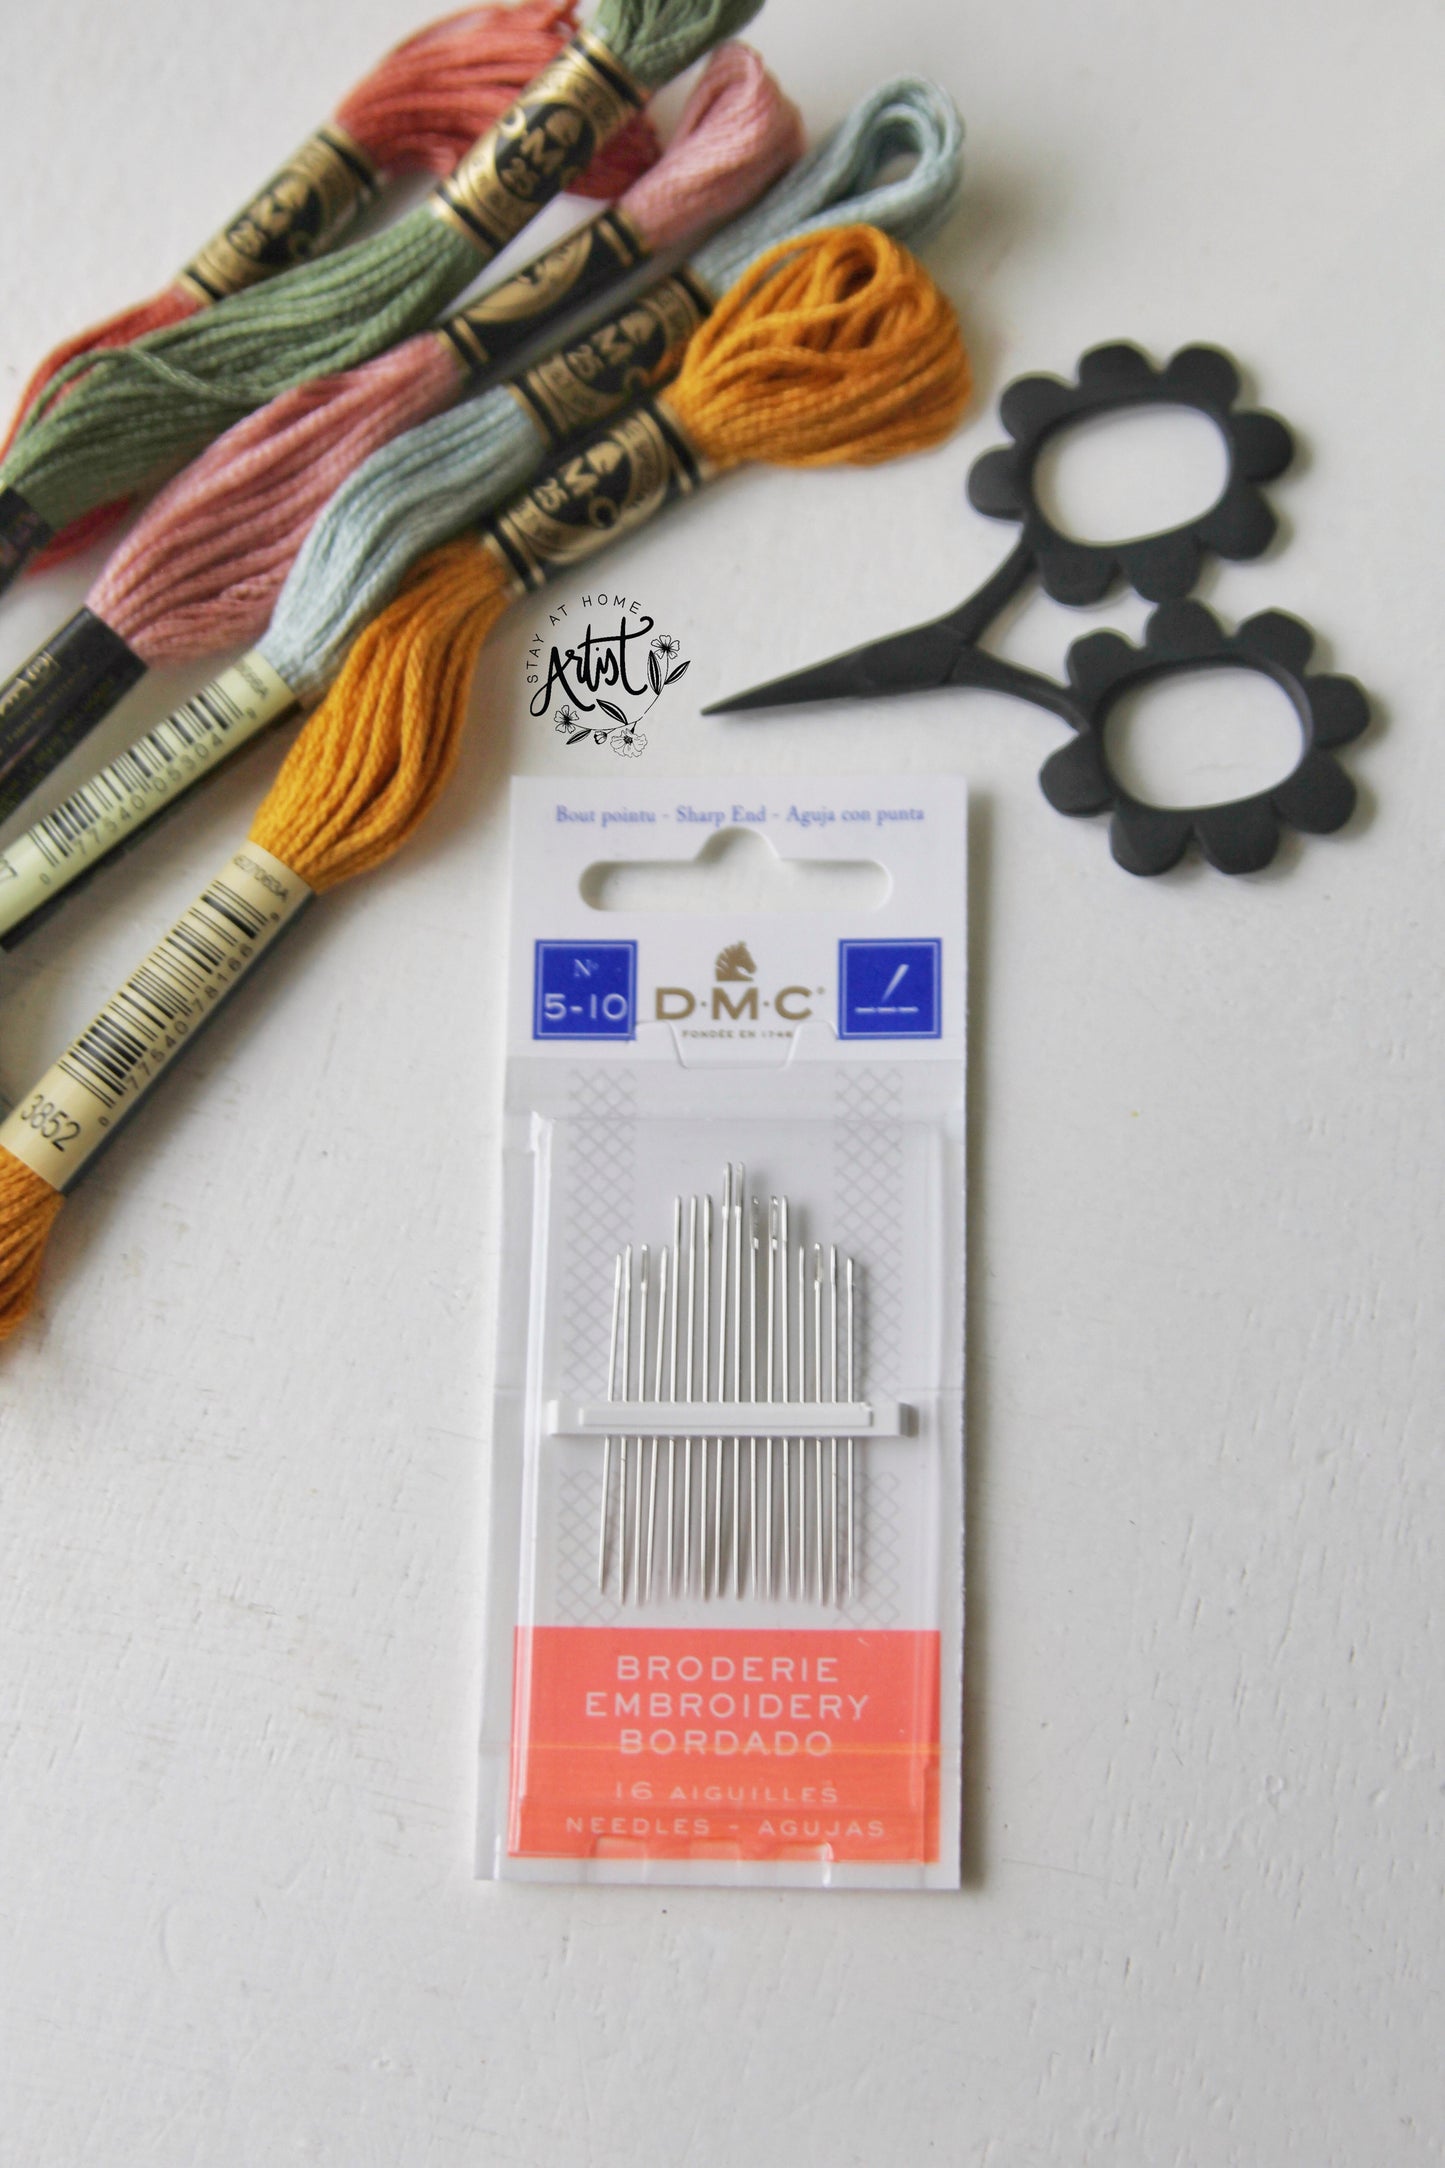 DMC Hand Embroidery Needles